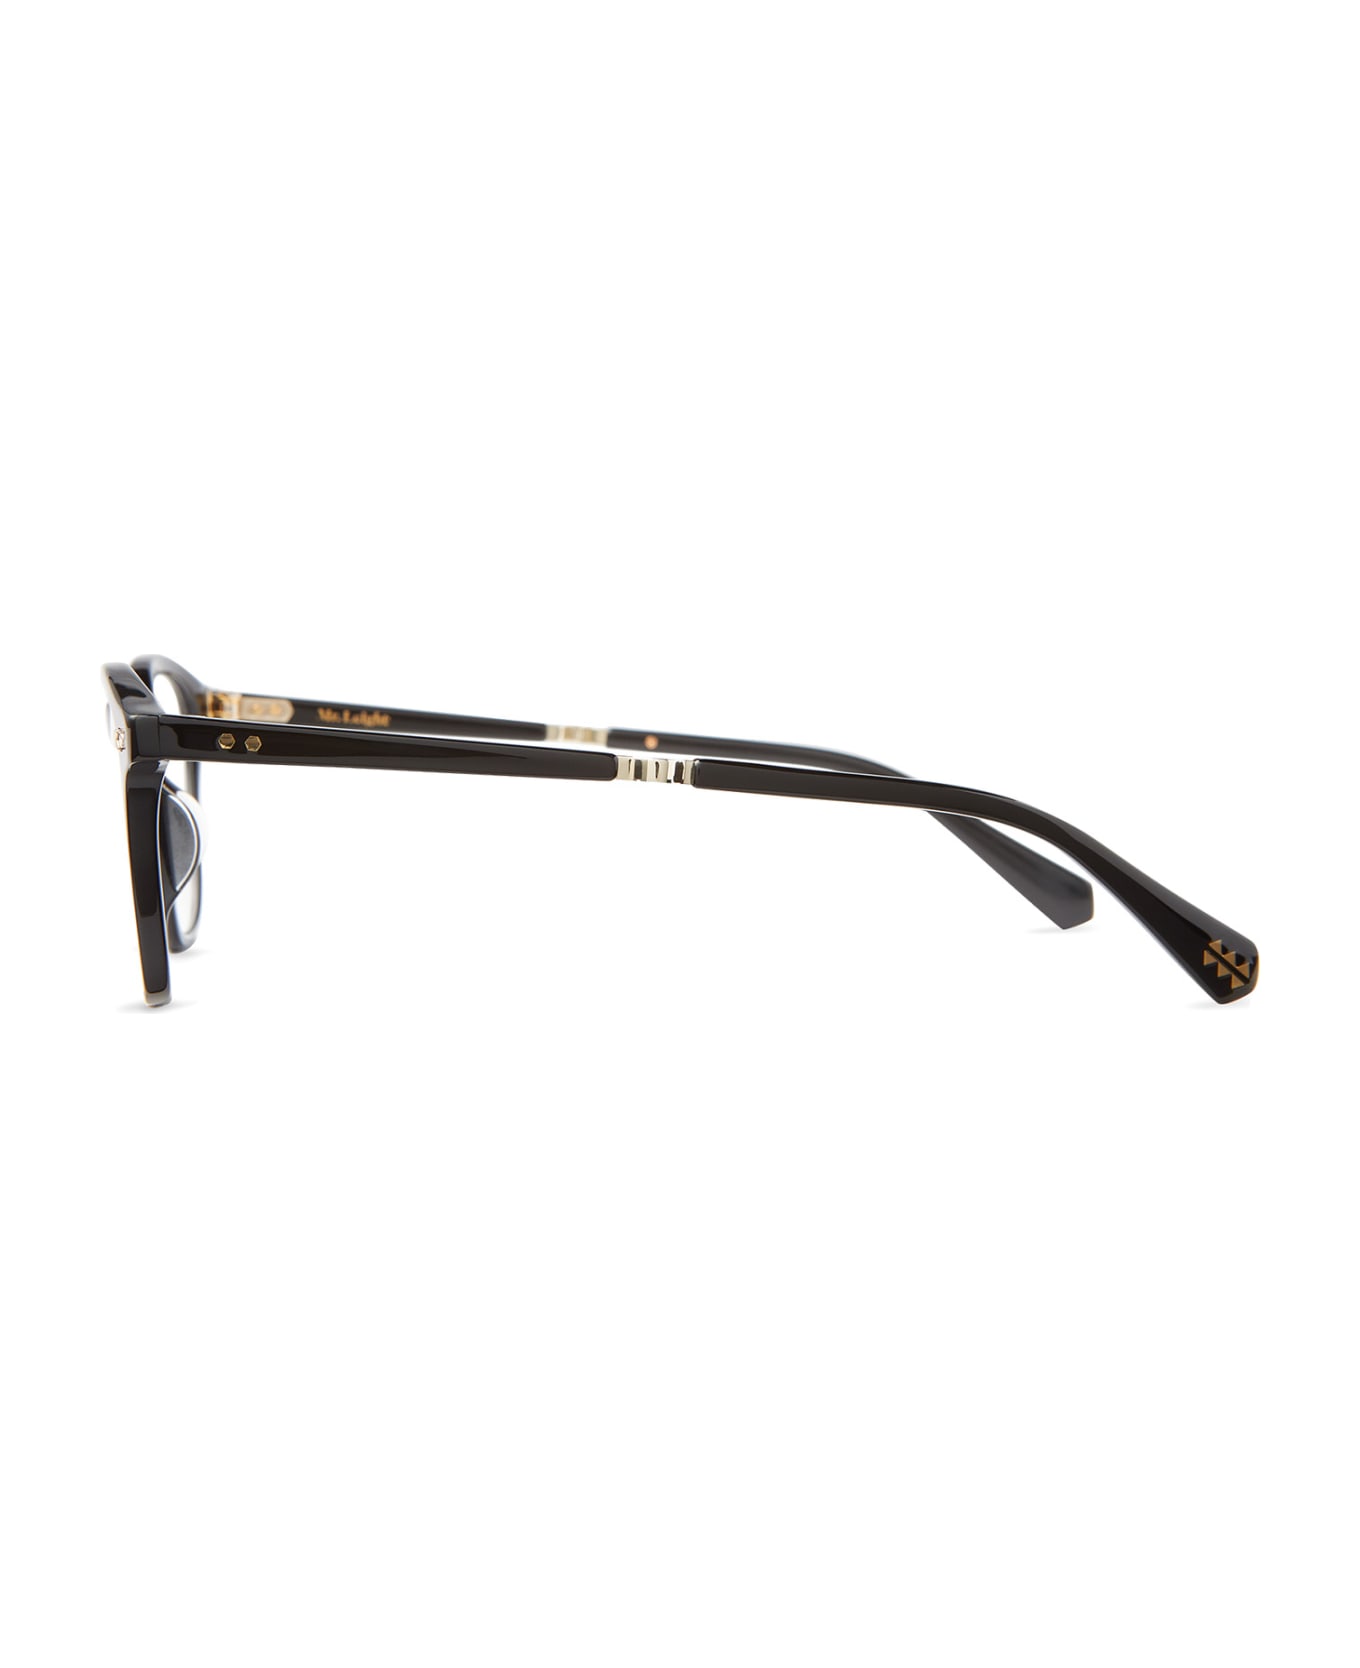 Mr. Leight Devon C Black-gunmetal Glasses - Black-Gunmetal